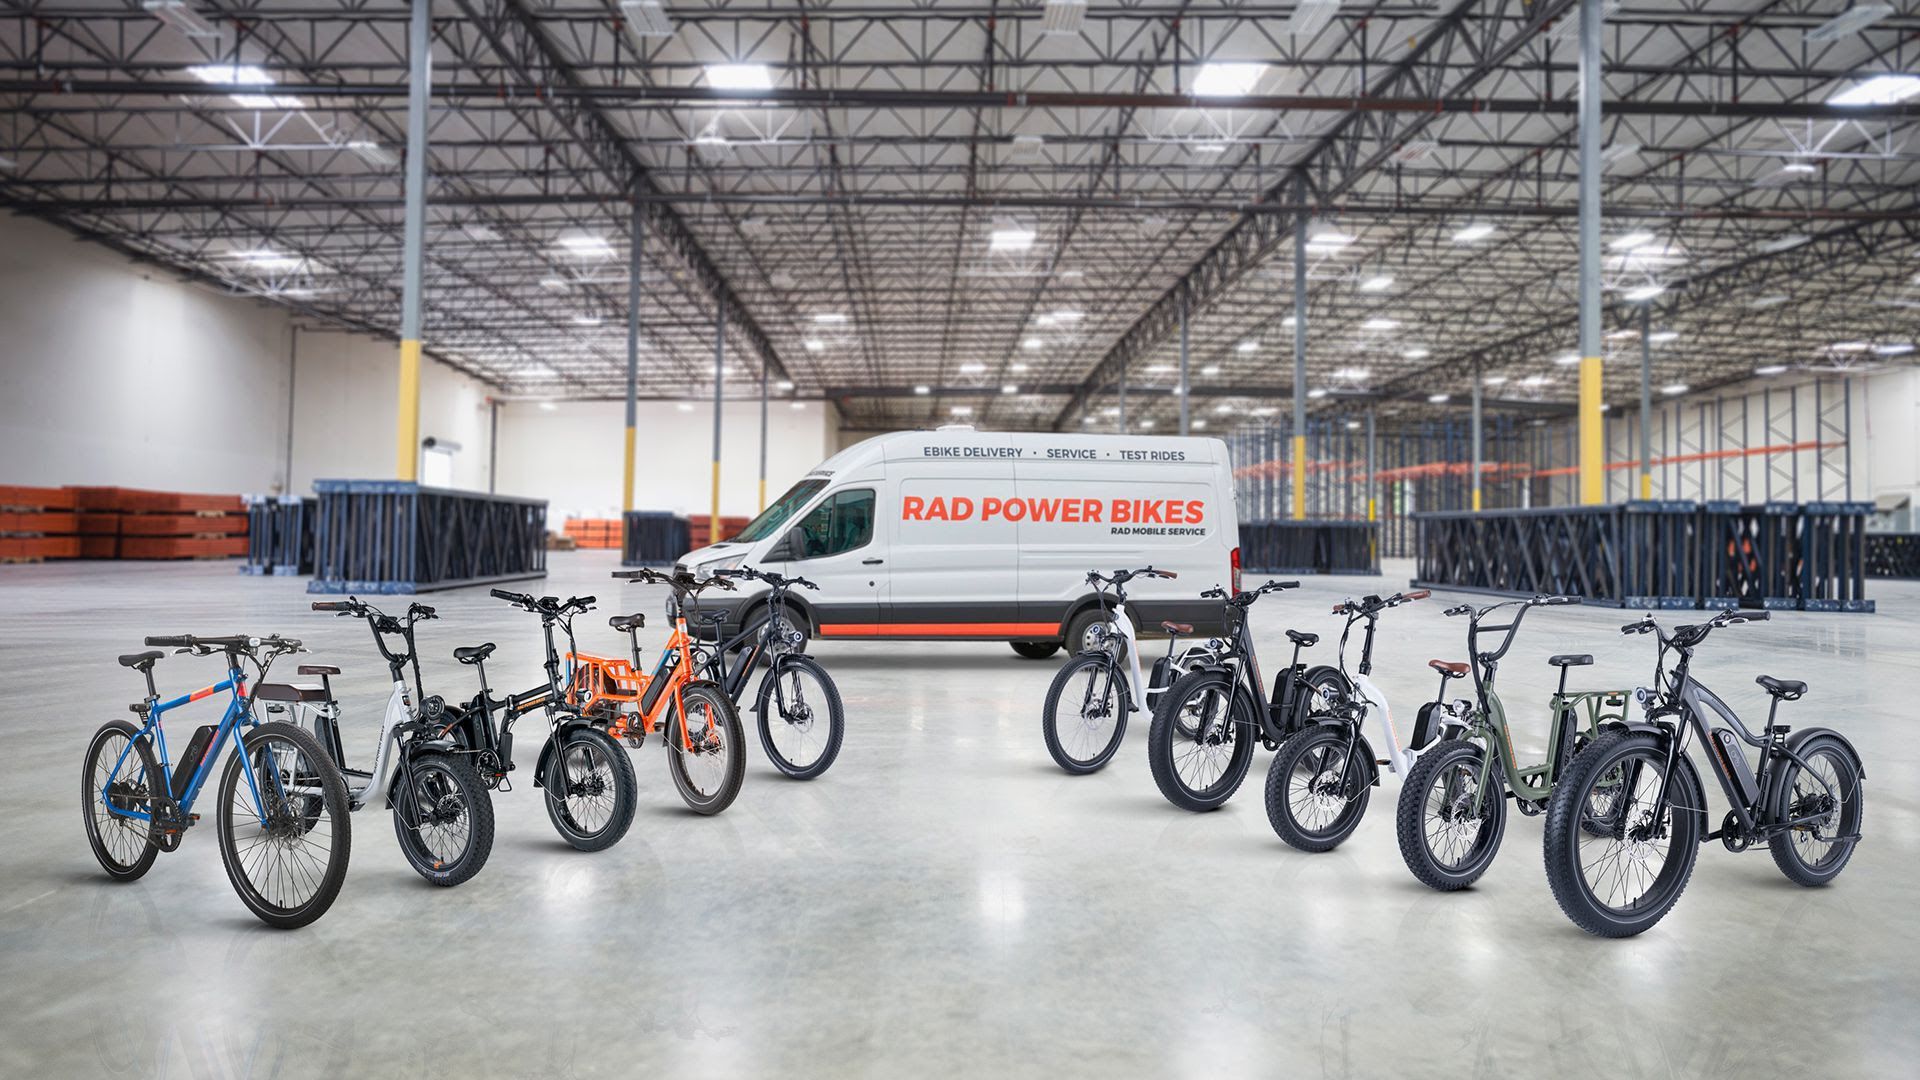 Seven Rad Power bikes lead to the company's white and orange van.